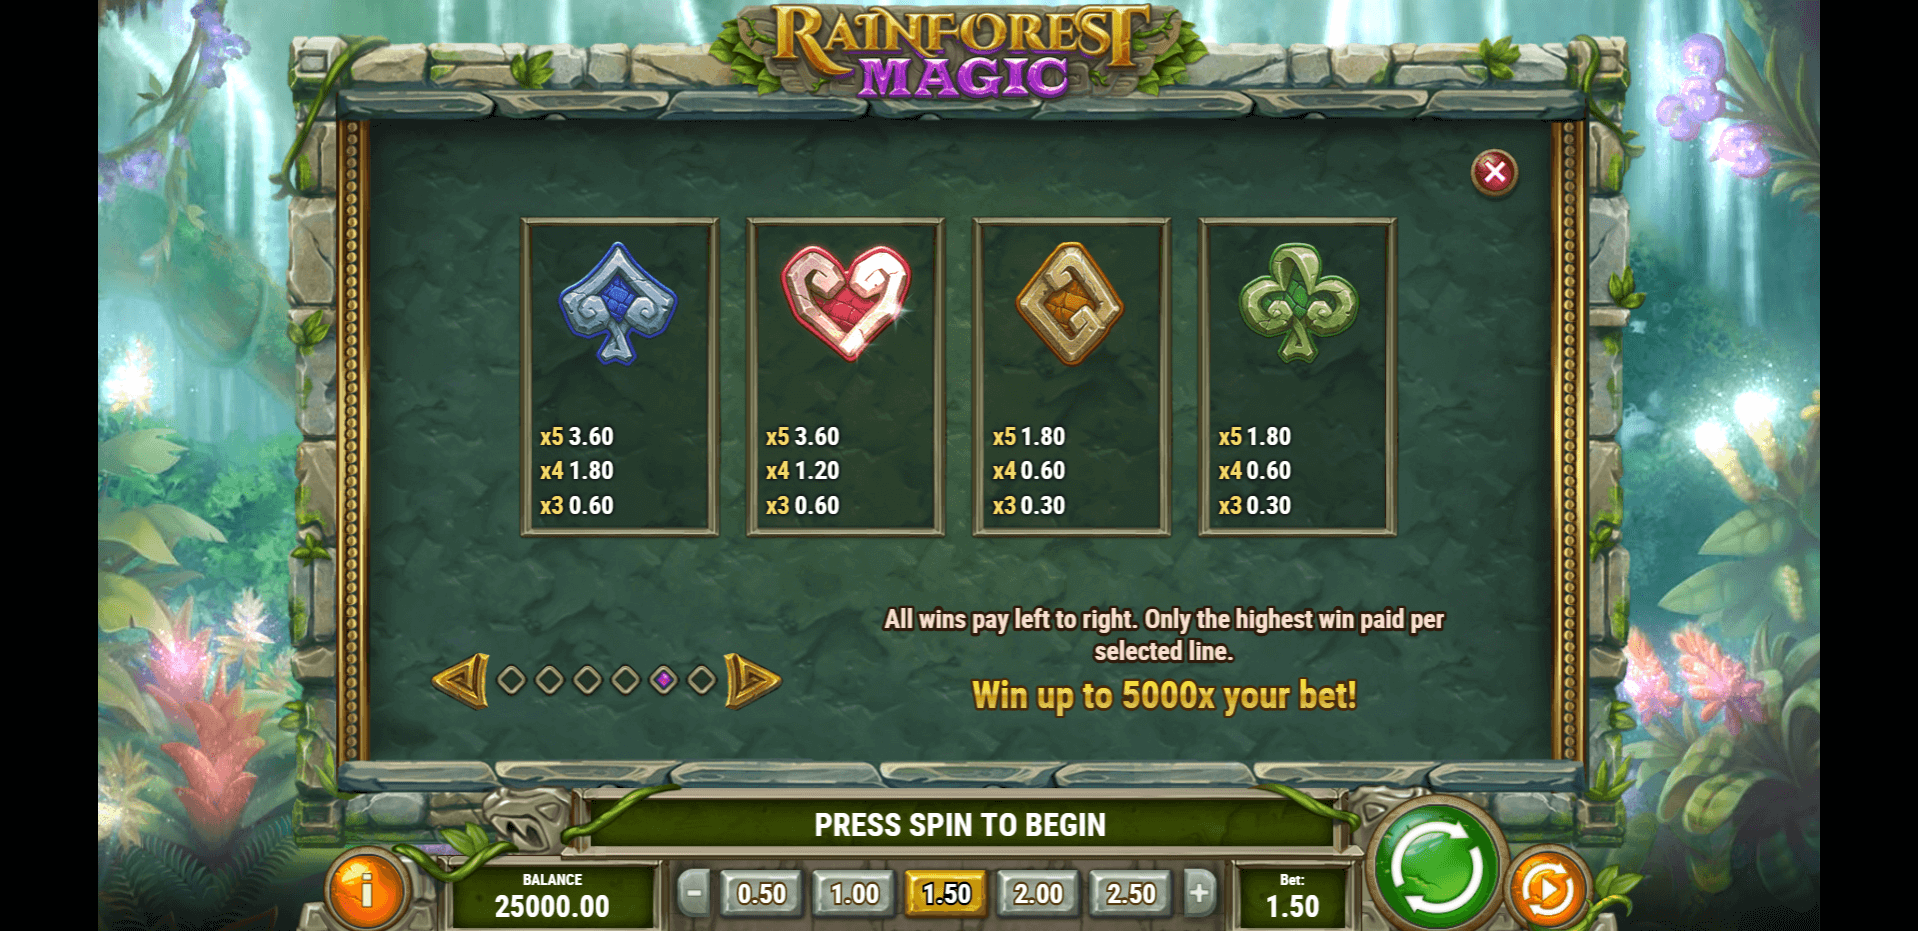 rainforest magic slot machine detail image 4